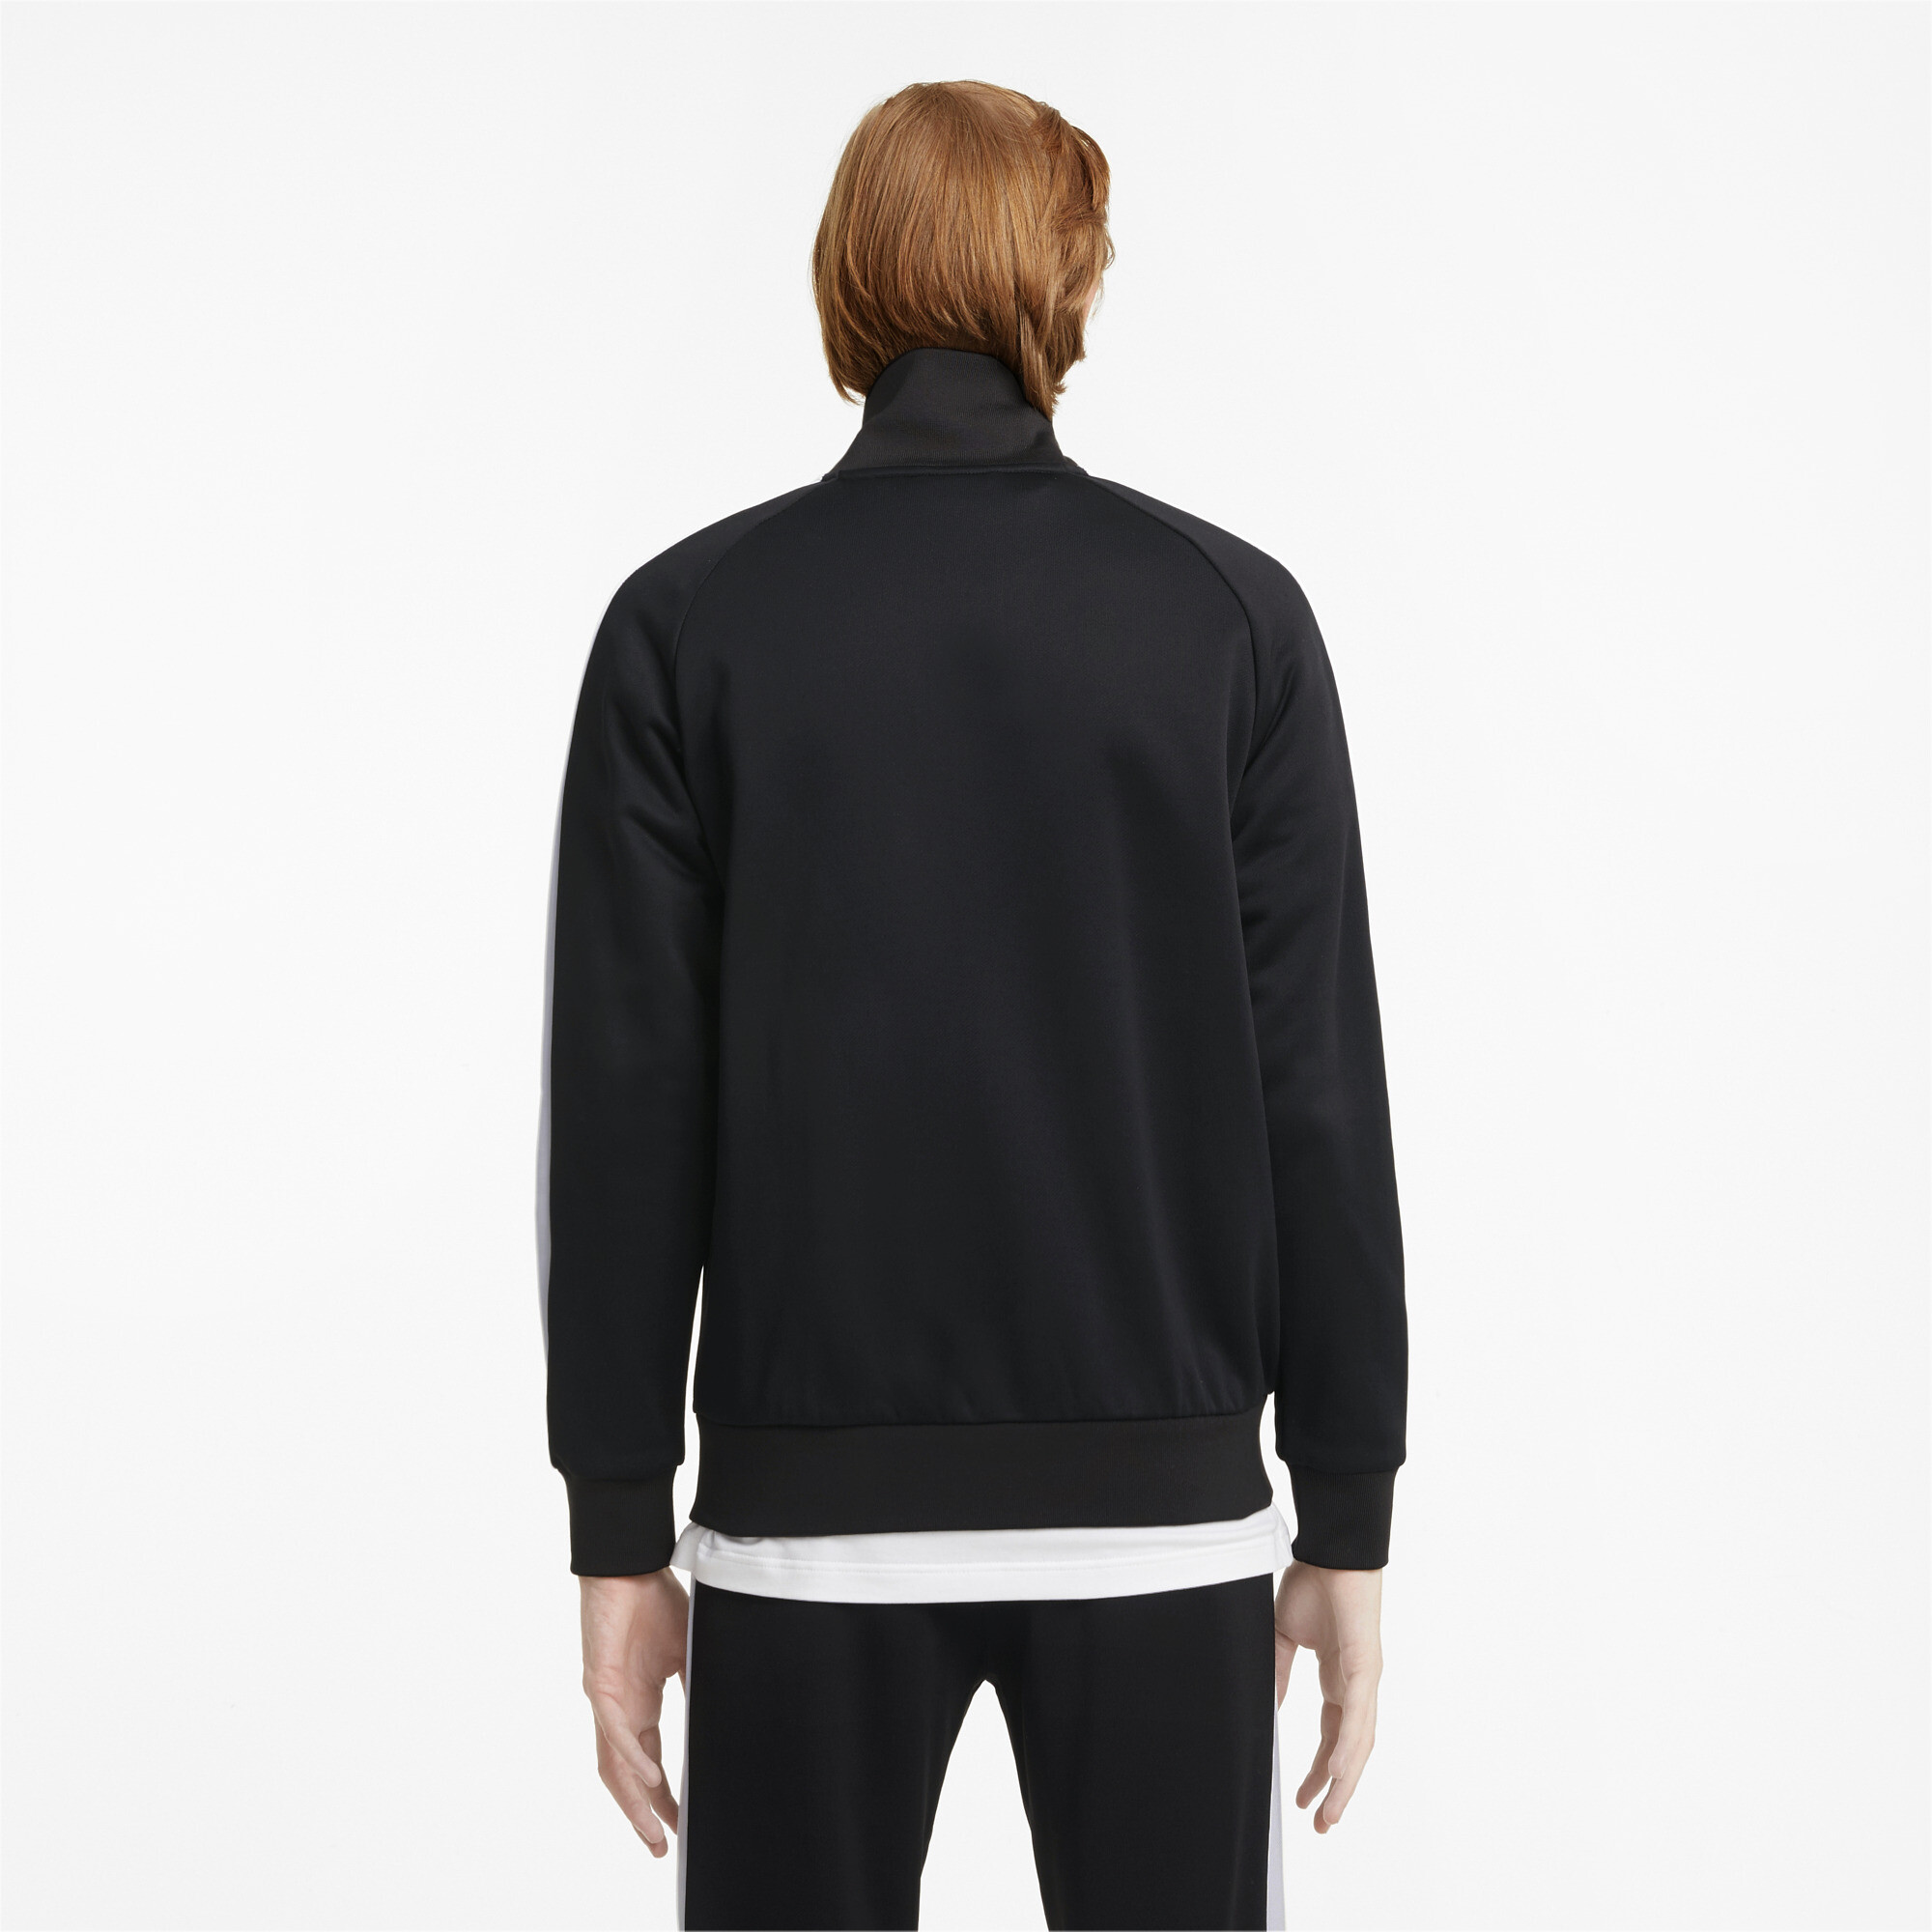 Men's PUMA Iconic T7 Track Jacket In Black, Size Medium